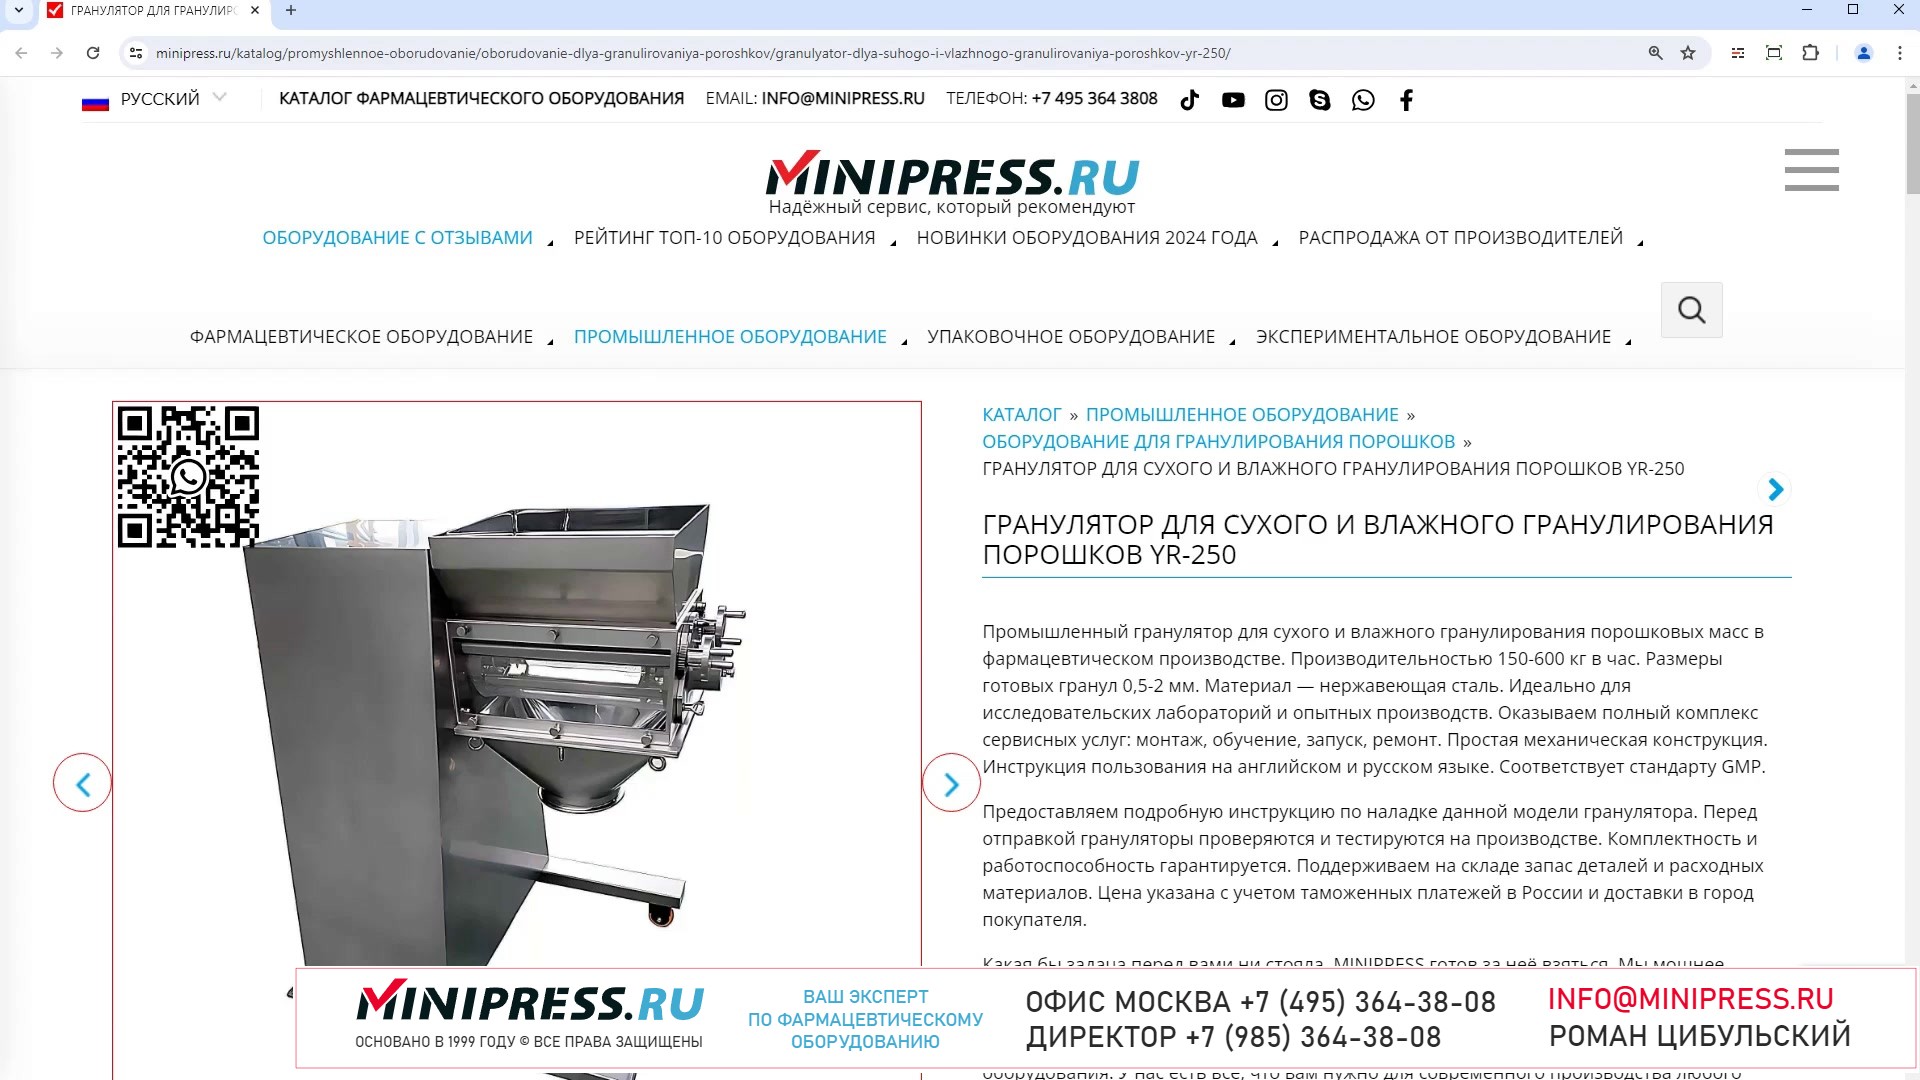 Minipress.ru Гранулятор для сухого и влажного гранулирования порошков YR-250